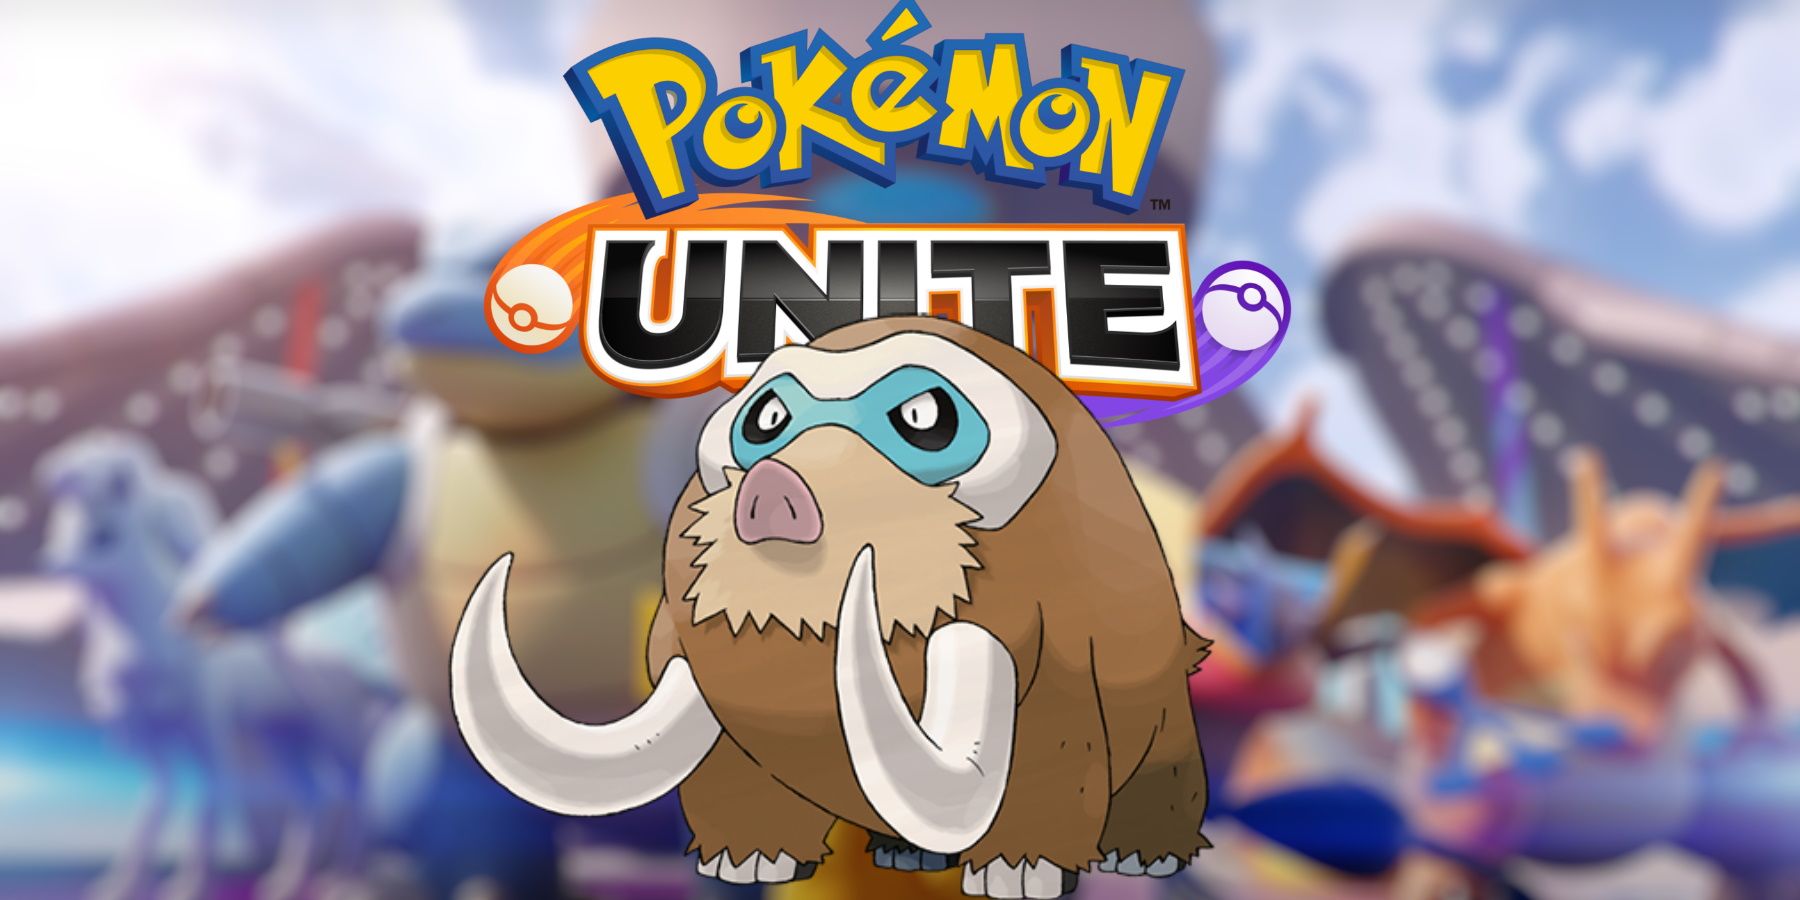 Pokemon Unite mamoswine team with logo